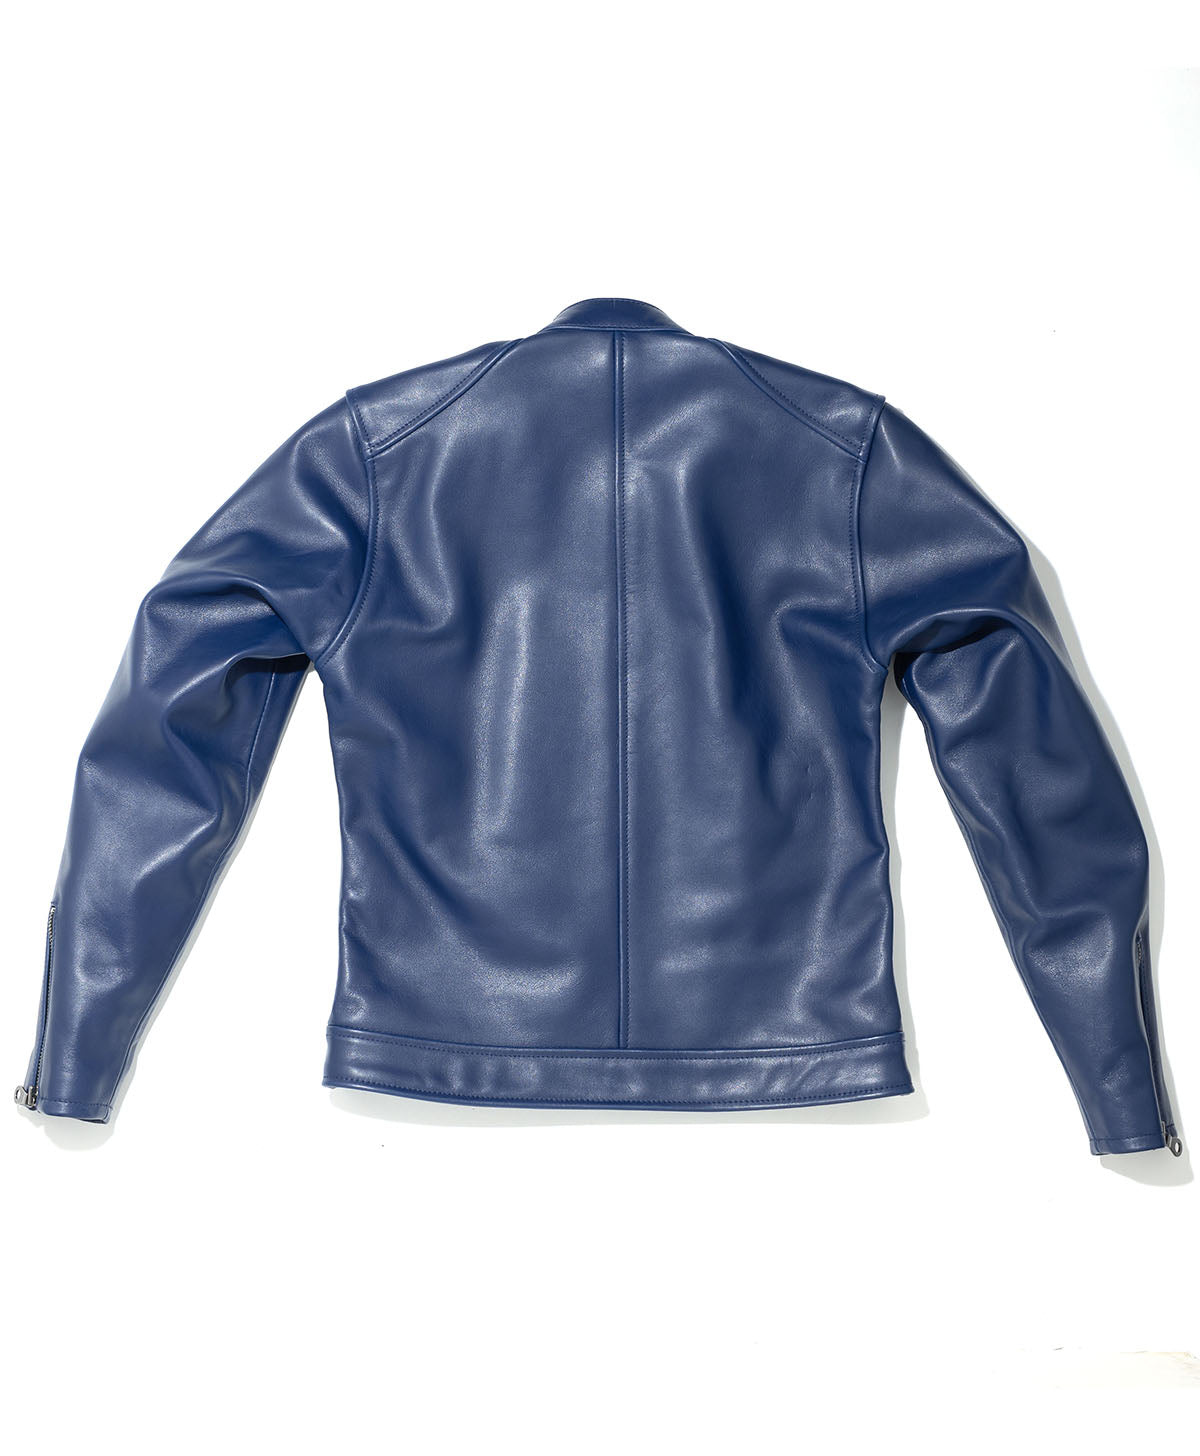 BIOHAZARD: DEATH ISLAND / 레온·S·케네디 극중 착용 모델 / 가죽 재킷